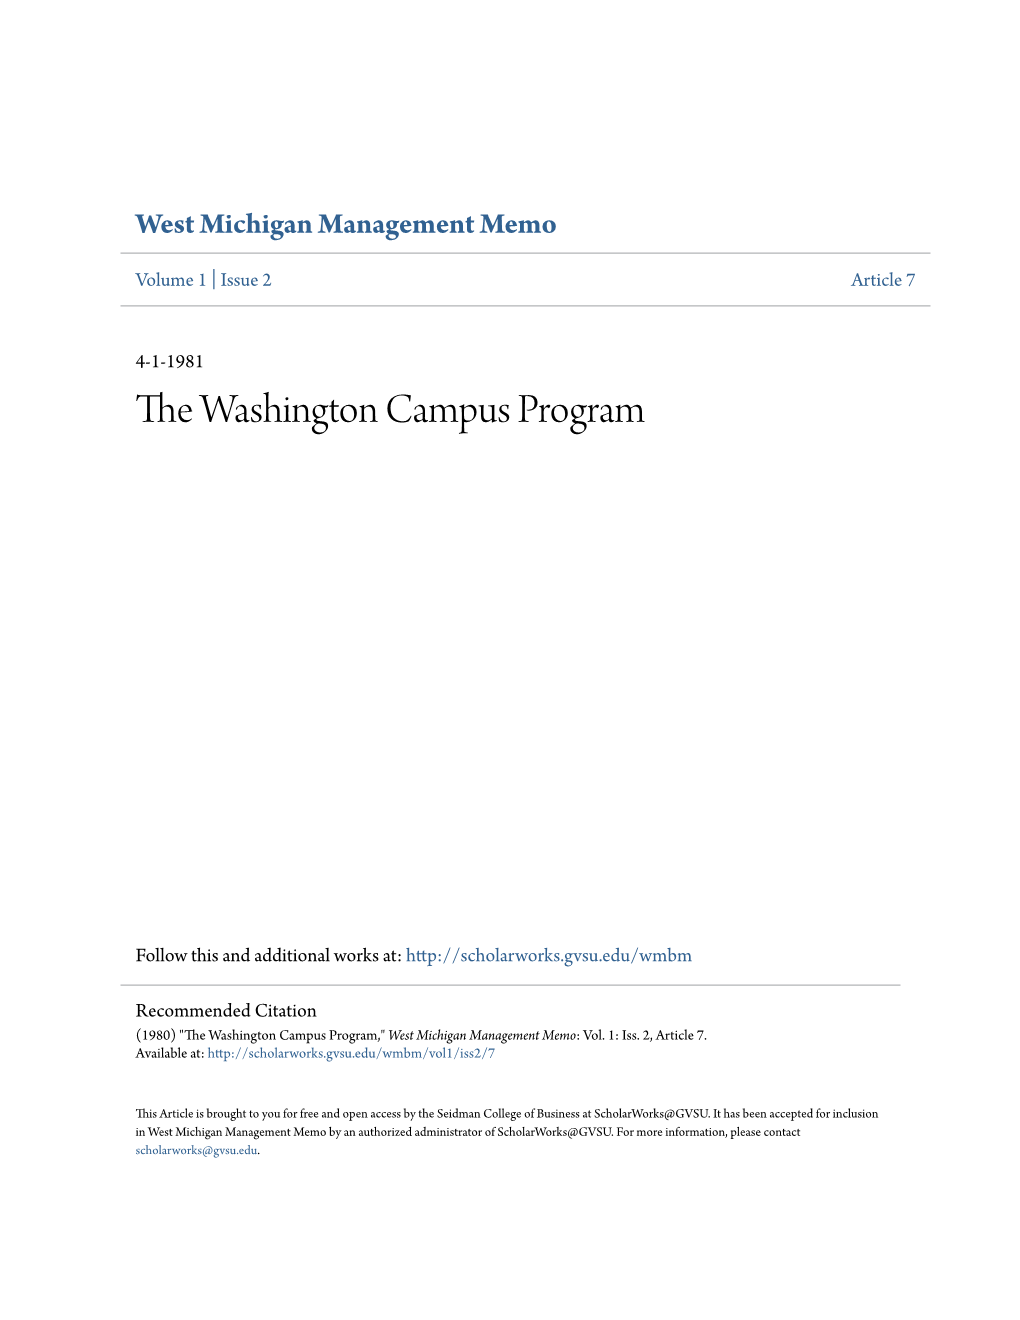 The Washington Campus Program the Washington Campus Program Was Economic Policy